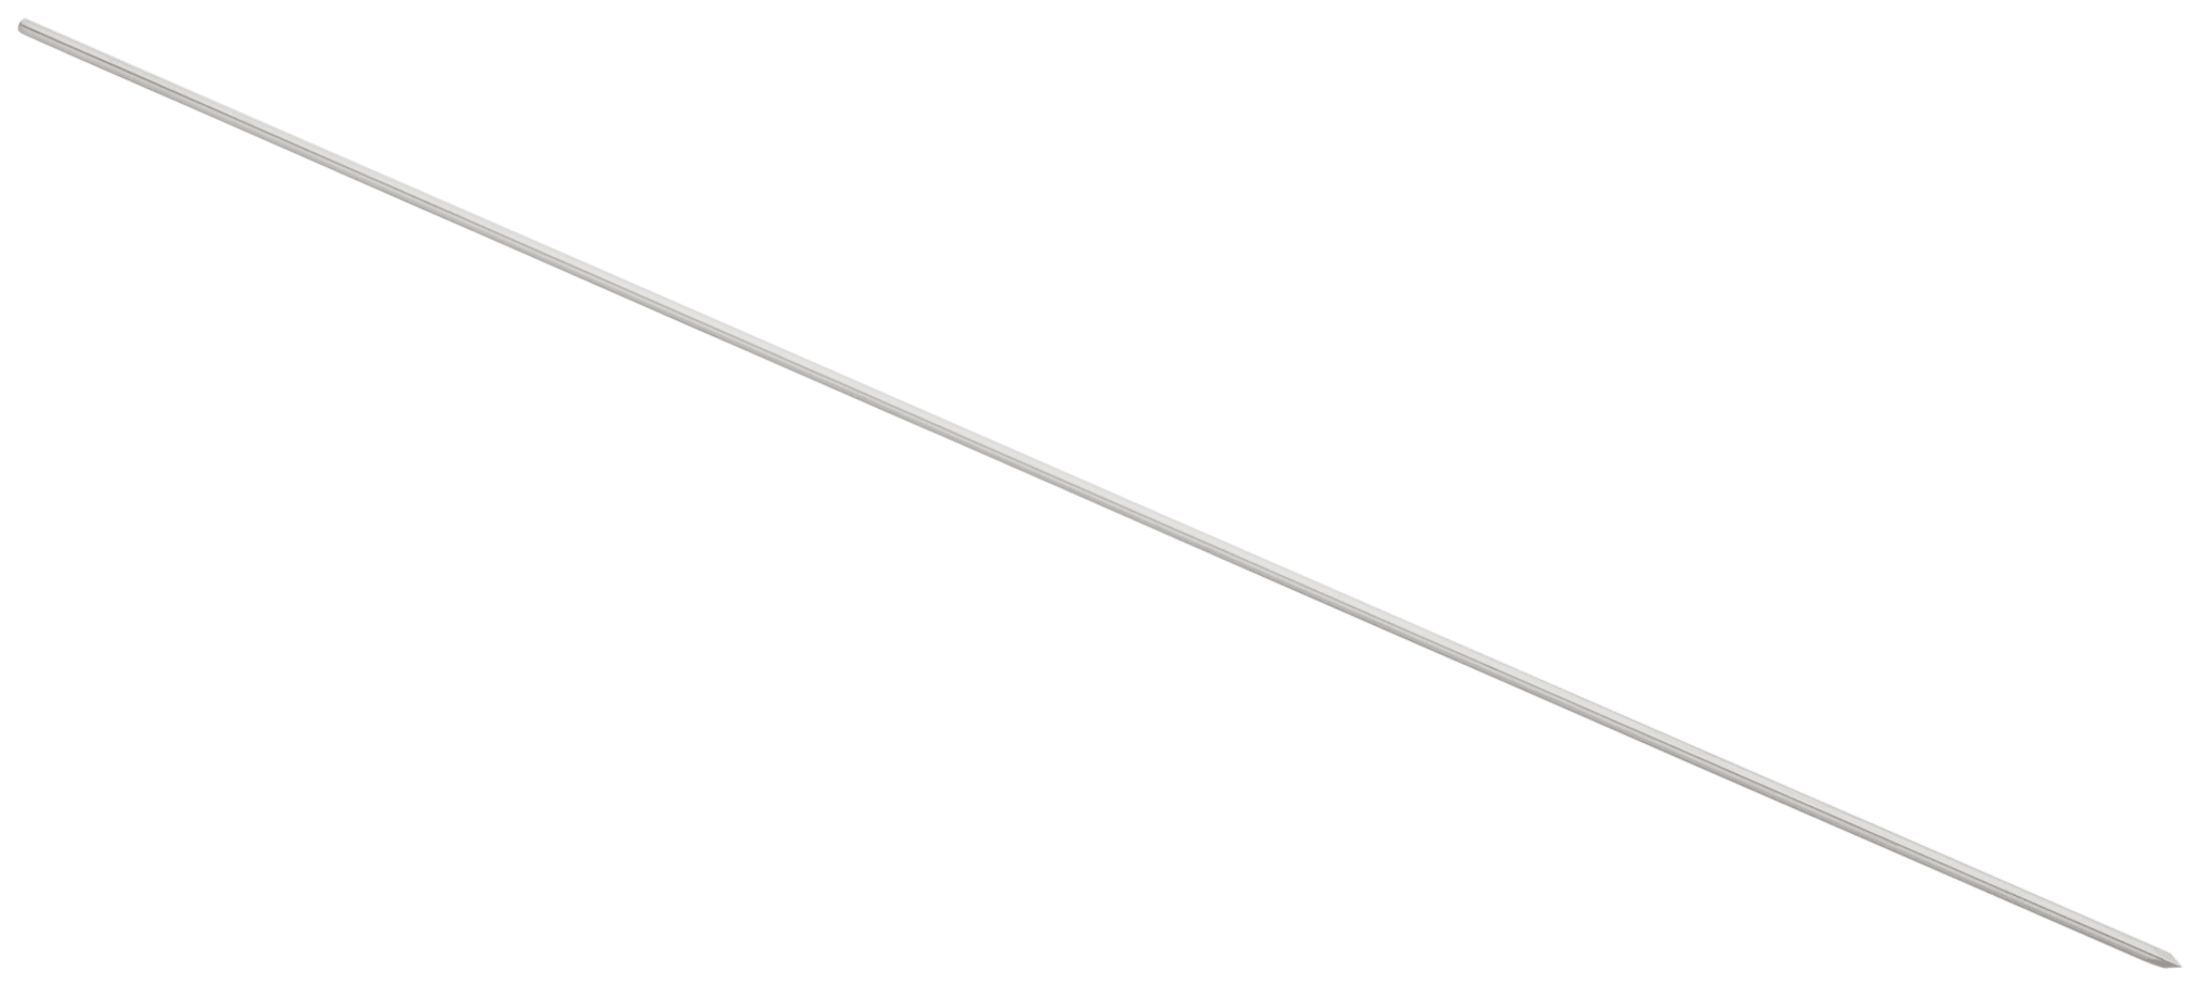 Nitinolführungsdraht, mit Trokarspitze, 1.6 mm x 235 mm, steril